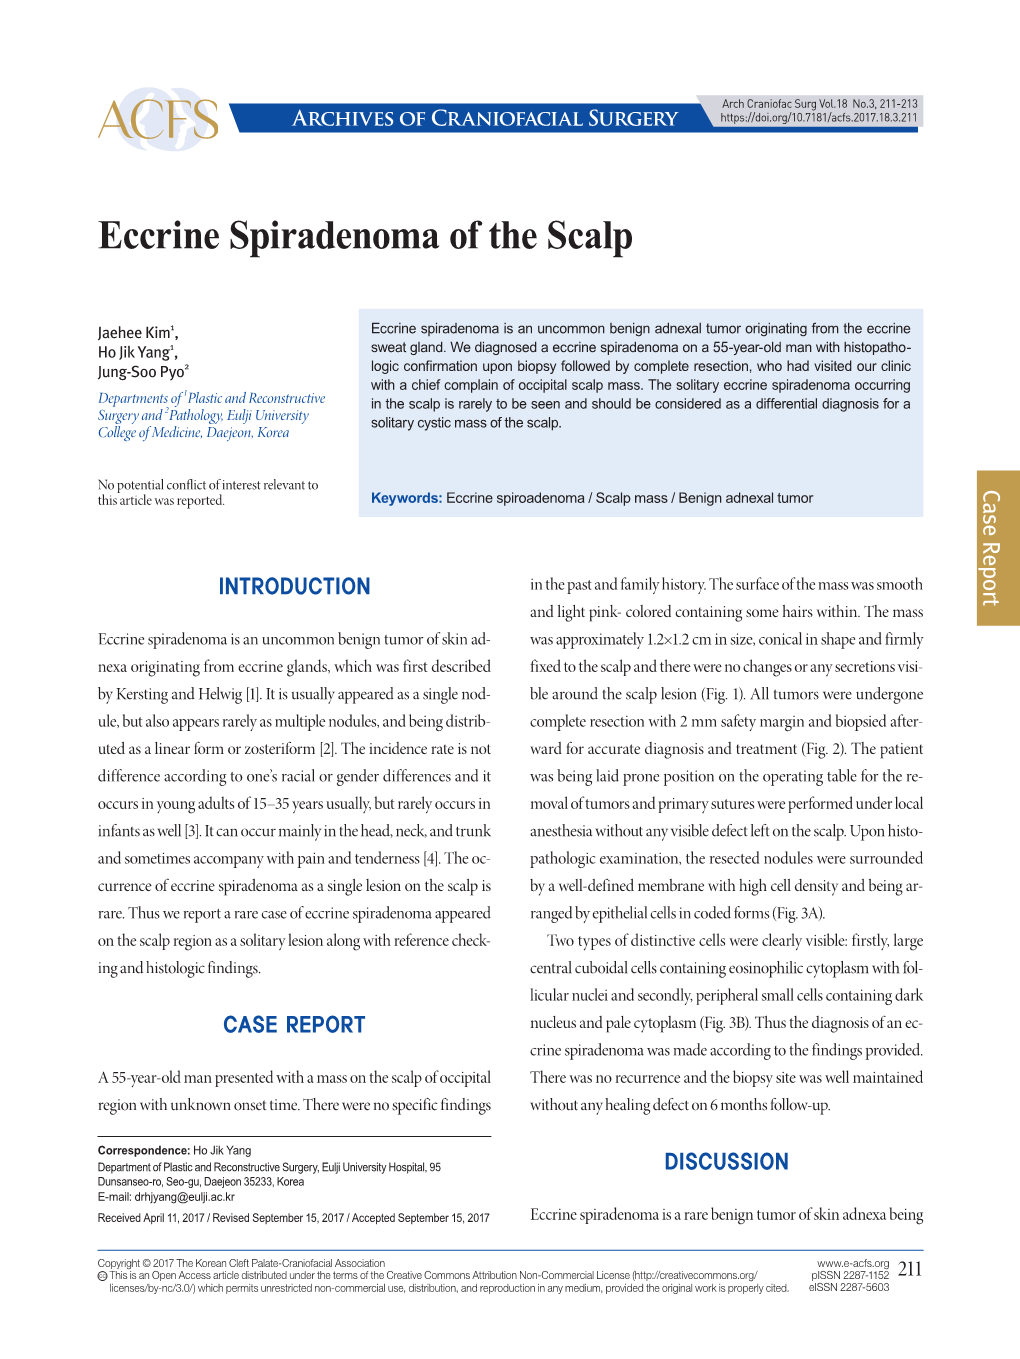 Eccrine Spiradenoma of the Scalp